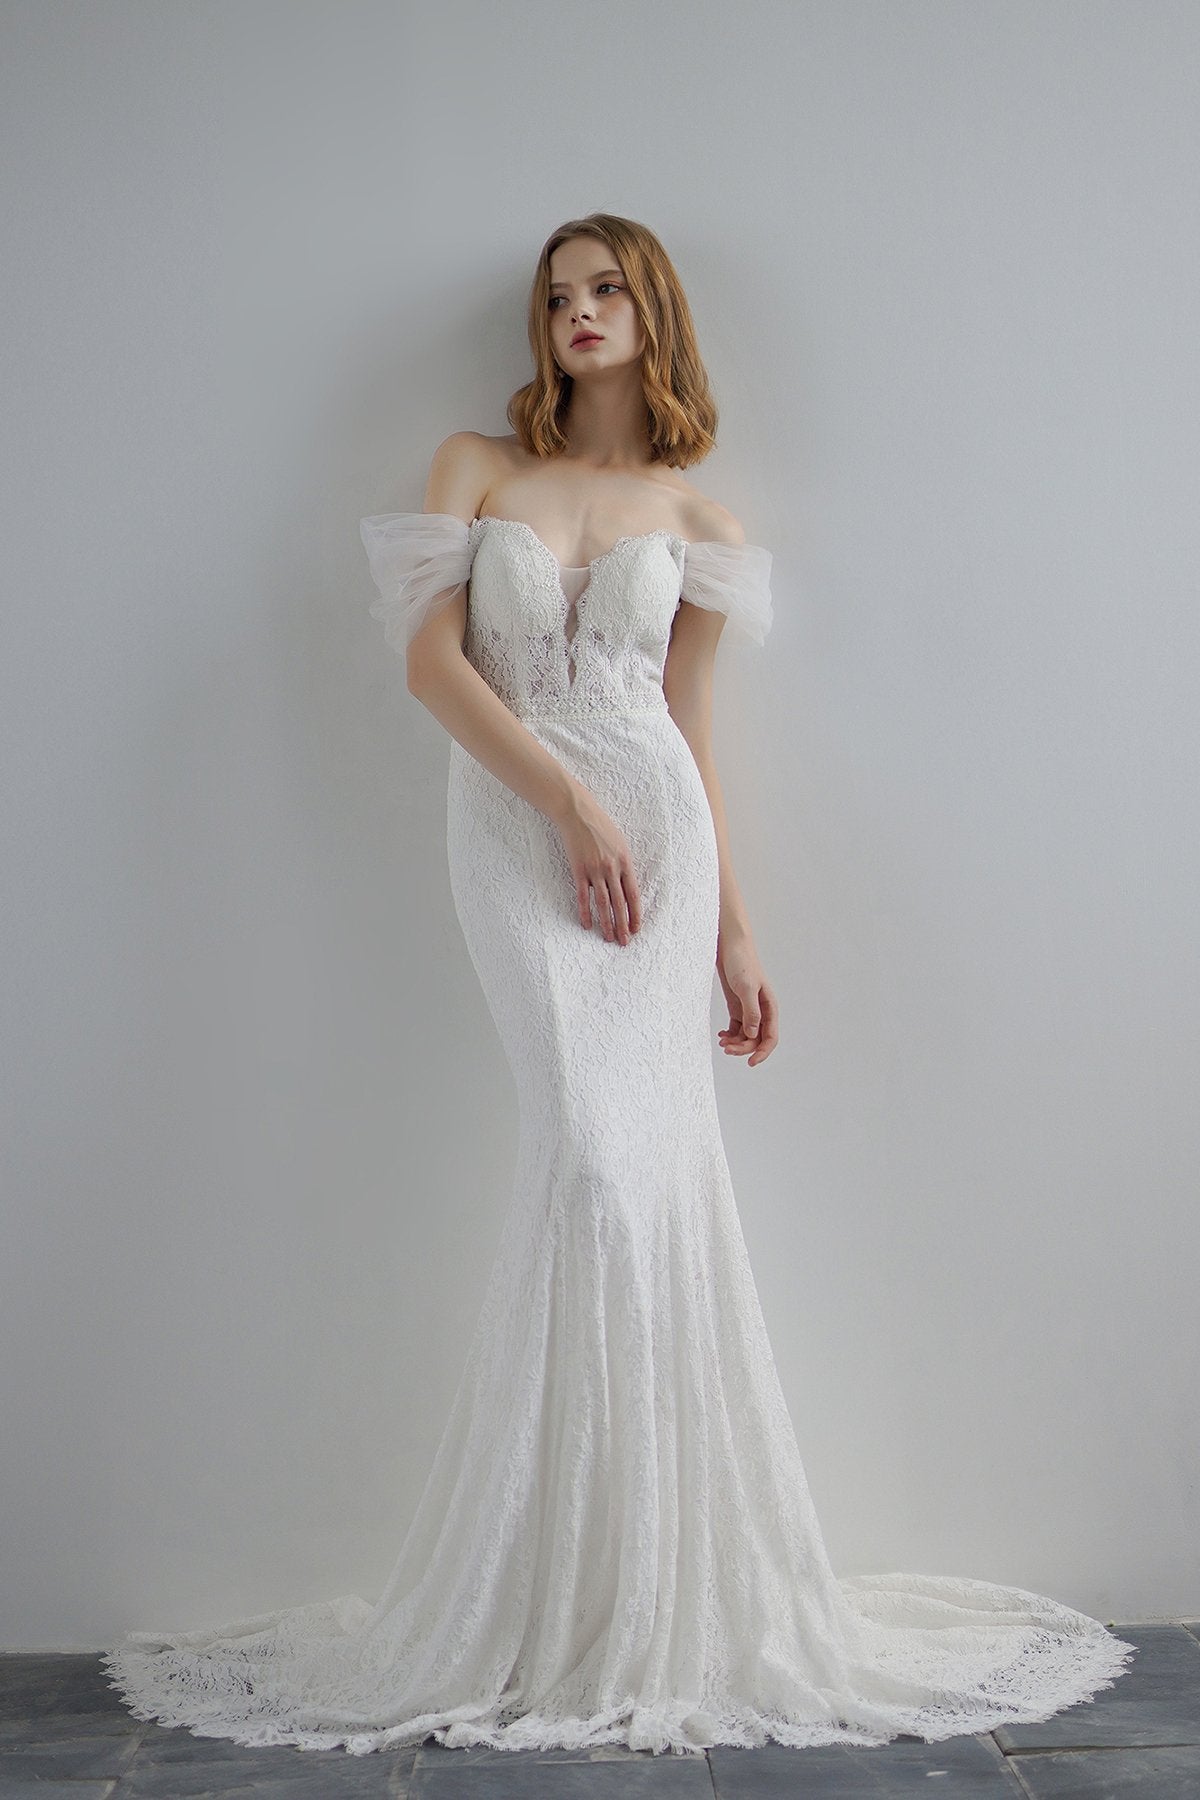 Mermaid Sweep-Brush Train Lace Tulle Wedding Dress CW3219